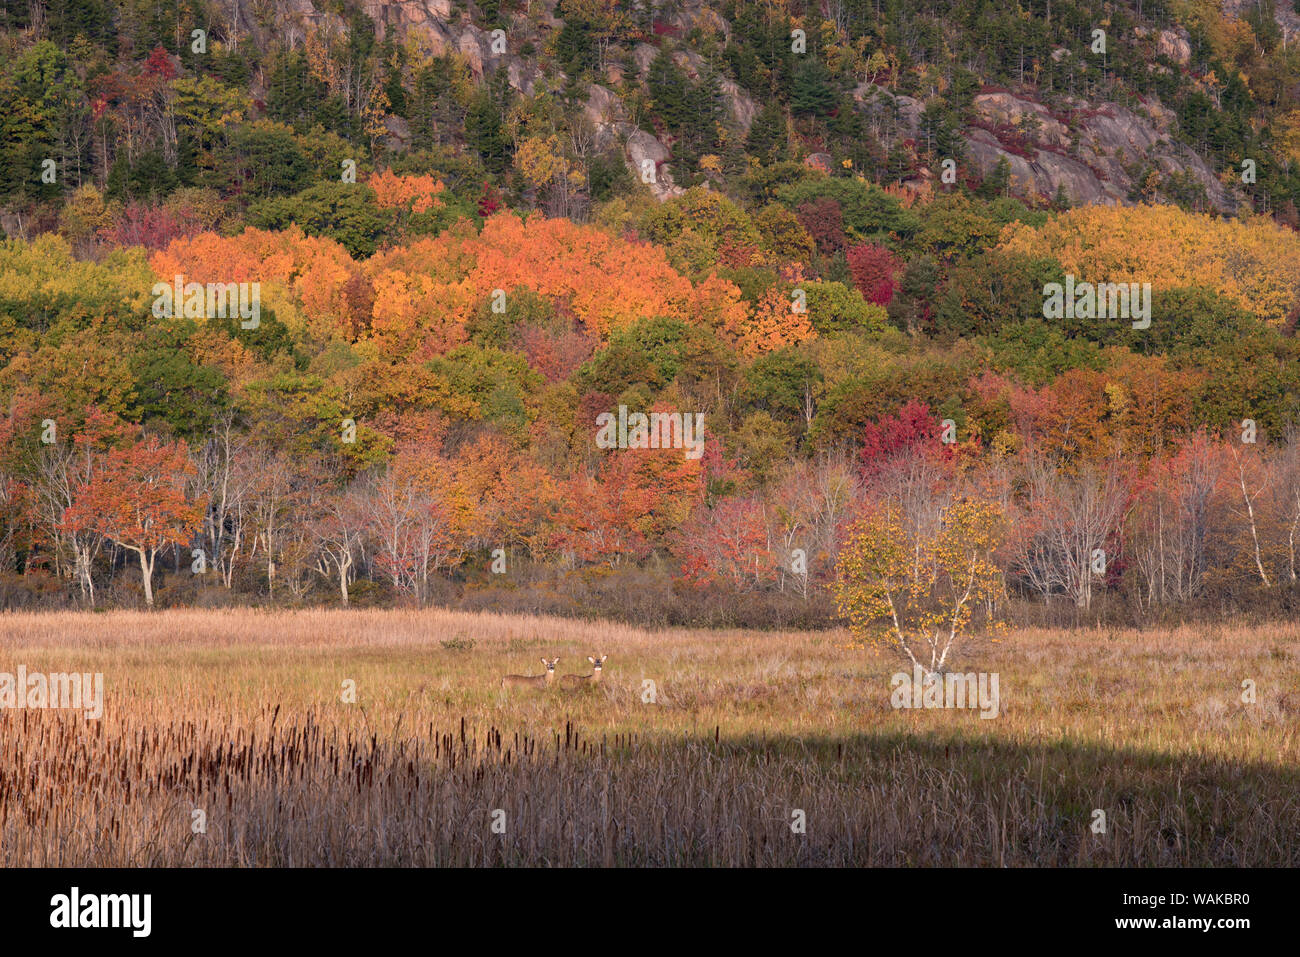 USA, Maine. Autumn foliage with deer, Acadia National Park. Stock Photo